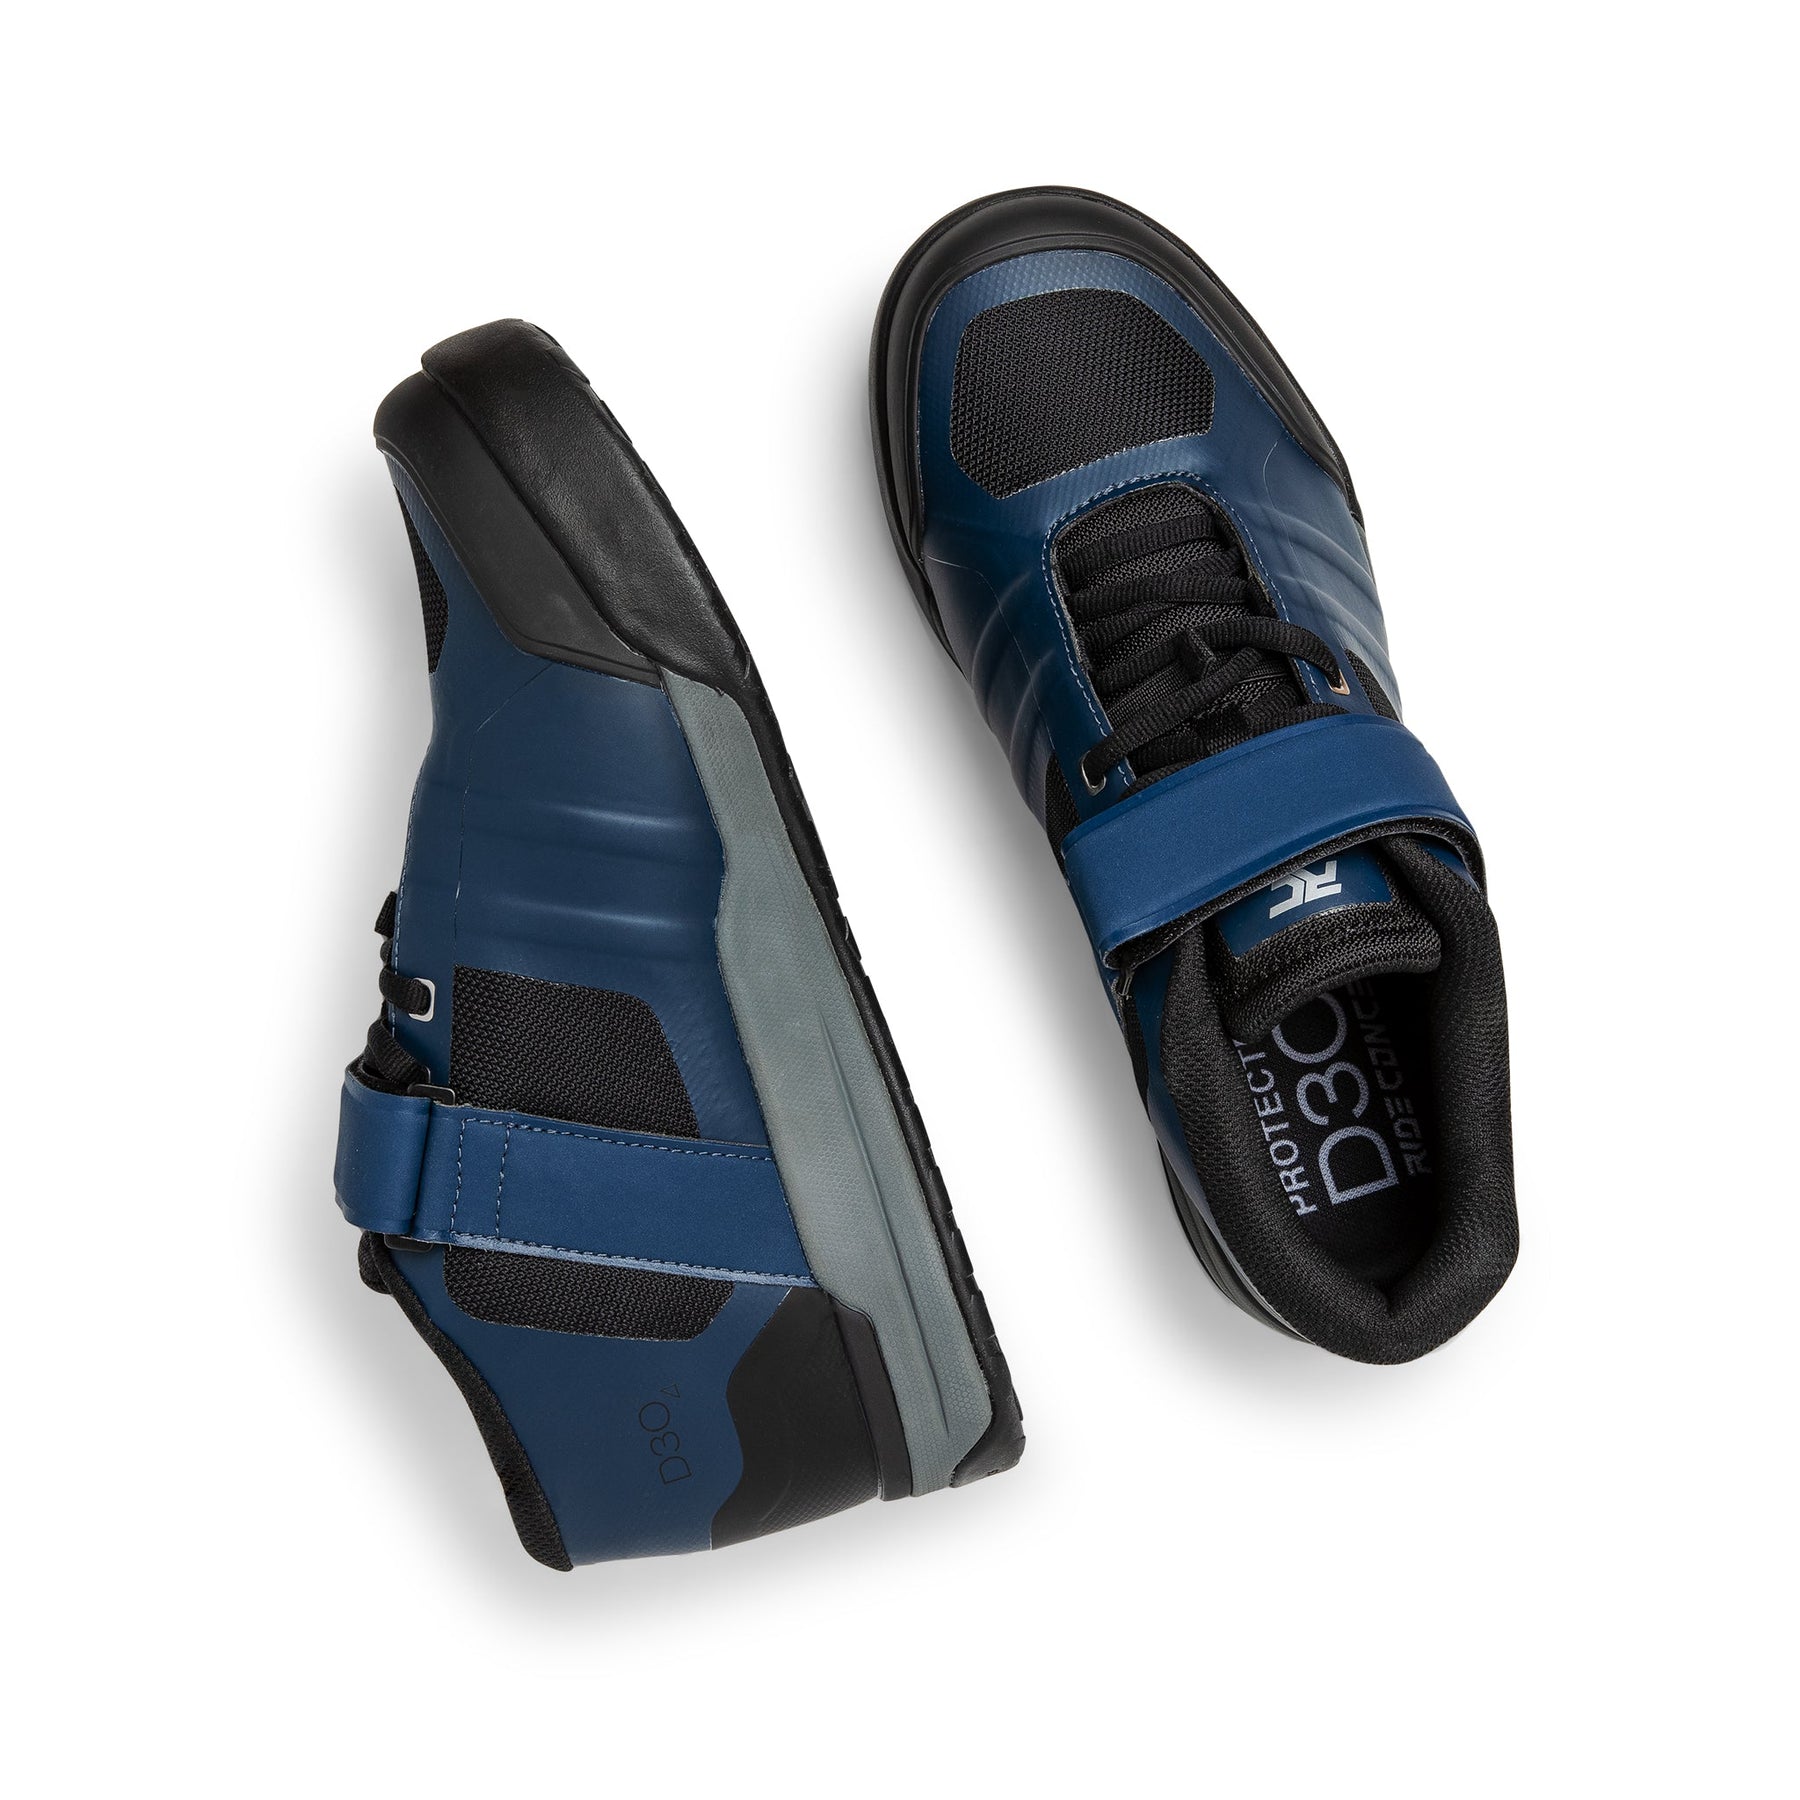 Ride Concepts Transition Spd Shoes - US 12.0 - Marine Blue - Image 2